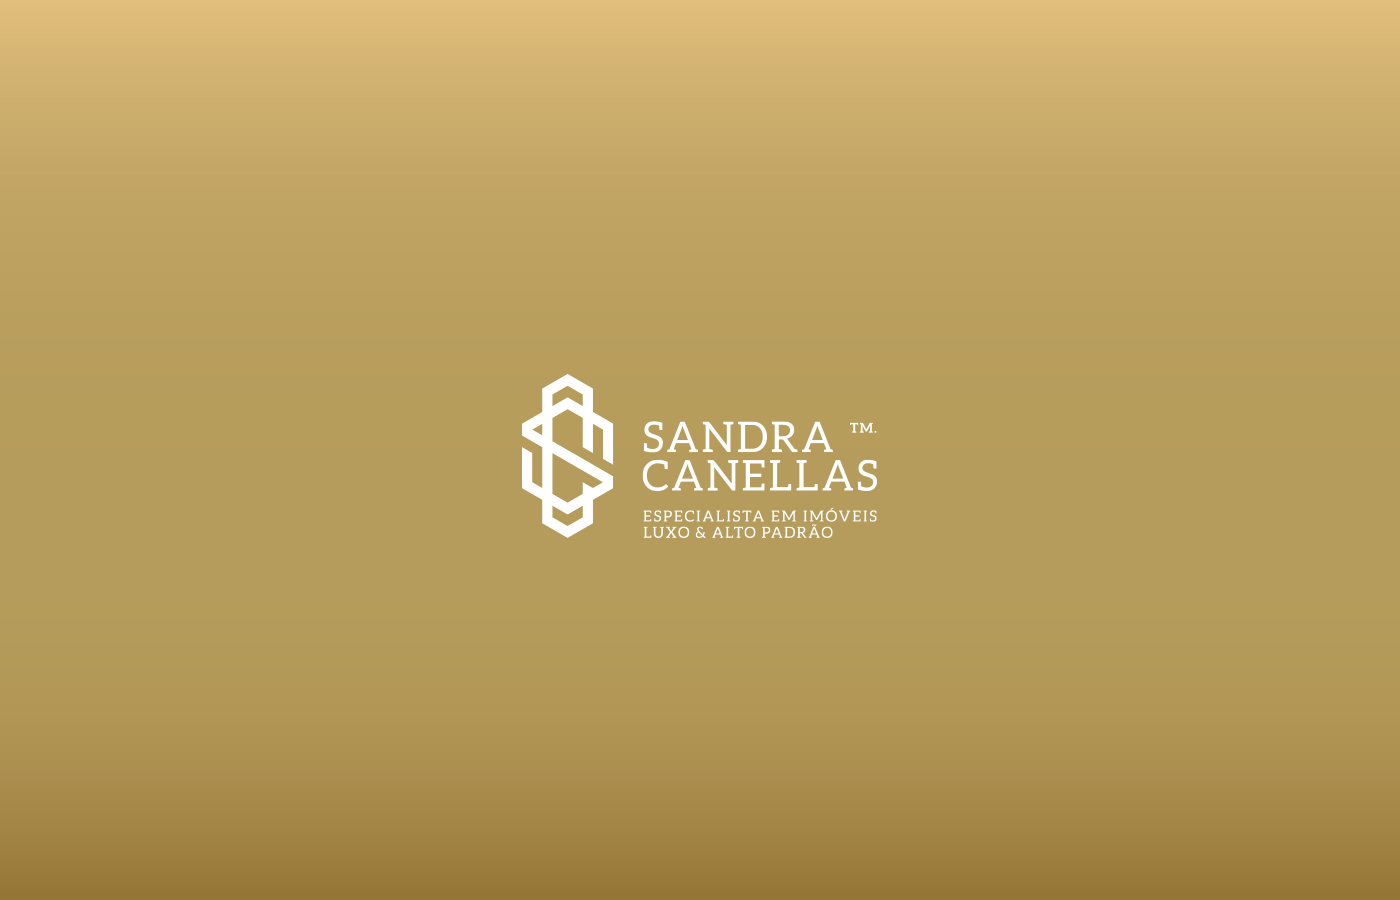 SANDRA identity visual Canellas luxury gold brand grid properties design